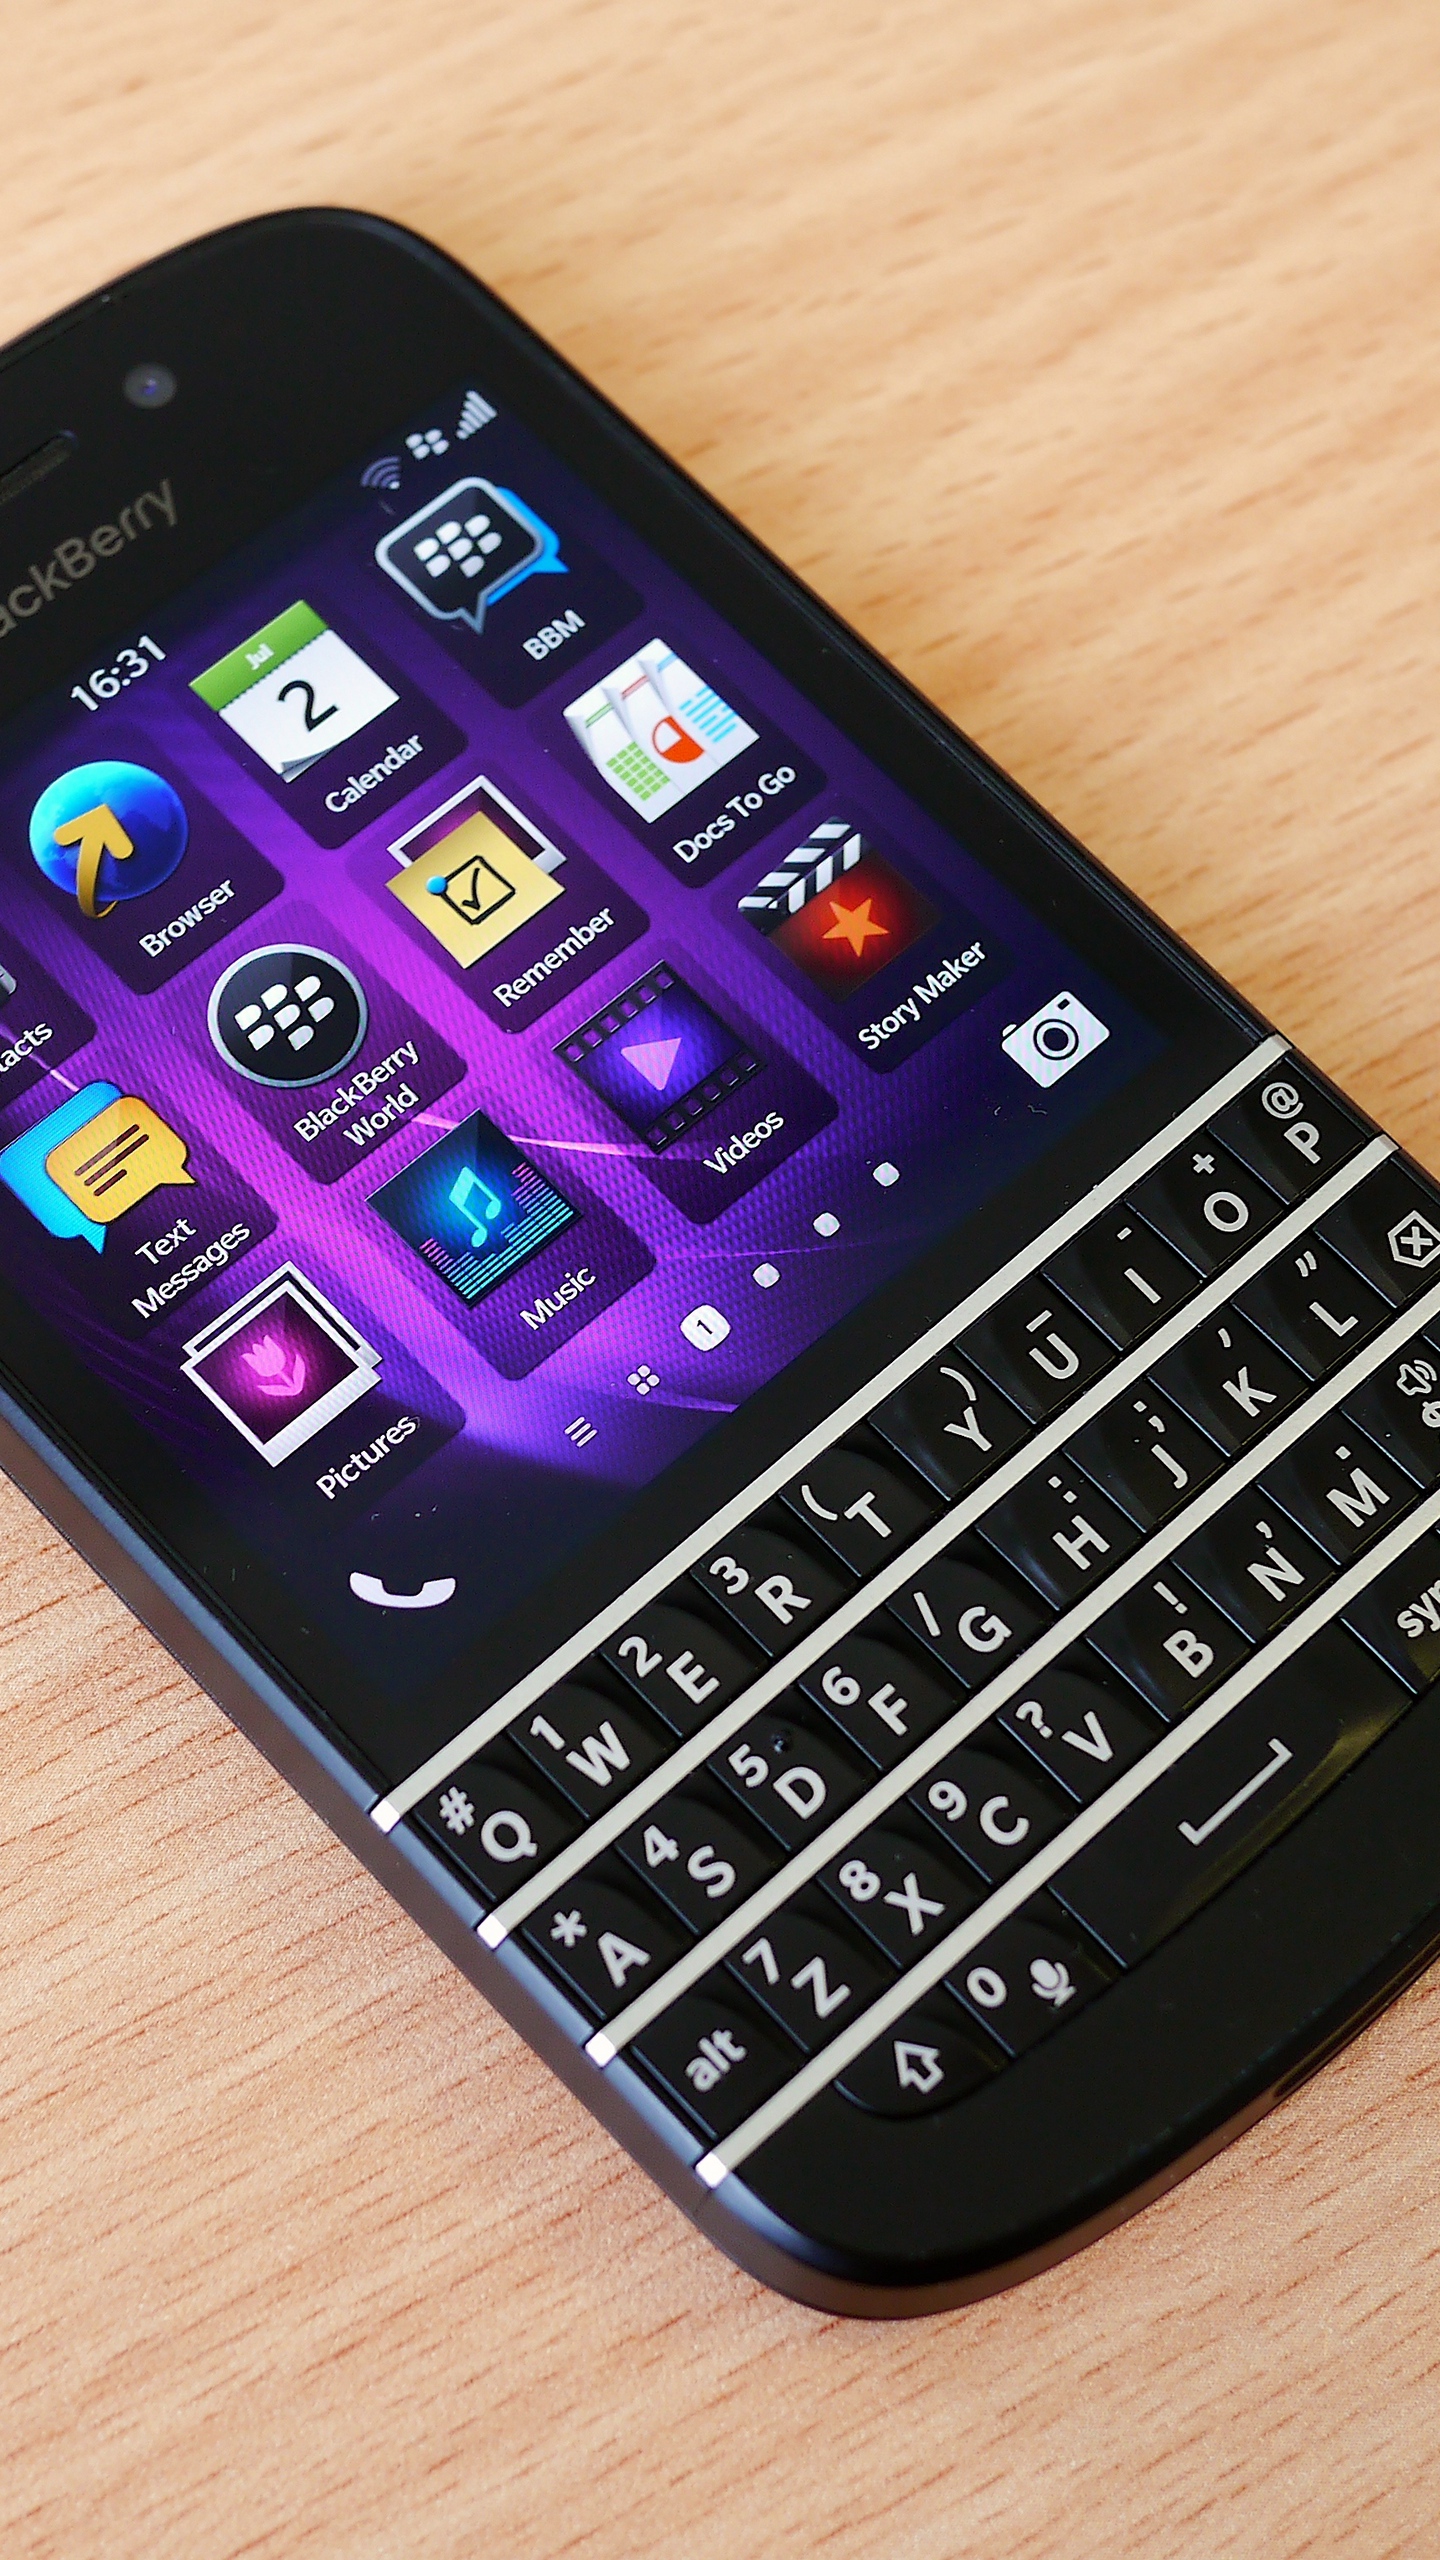 Wallpaper Blackberry, Mobile Phone, Smartphone - Blackberry Phone - HD Wallpaper 